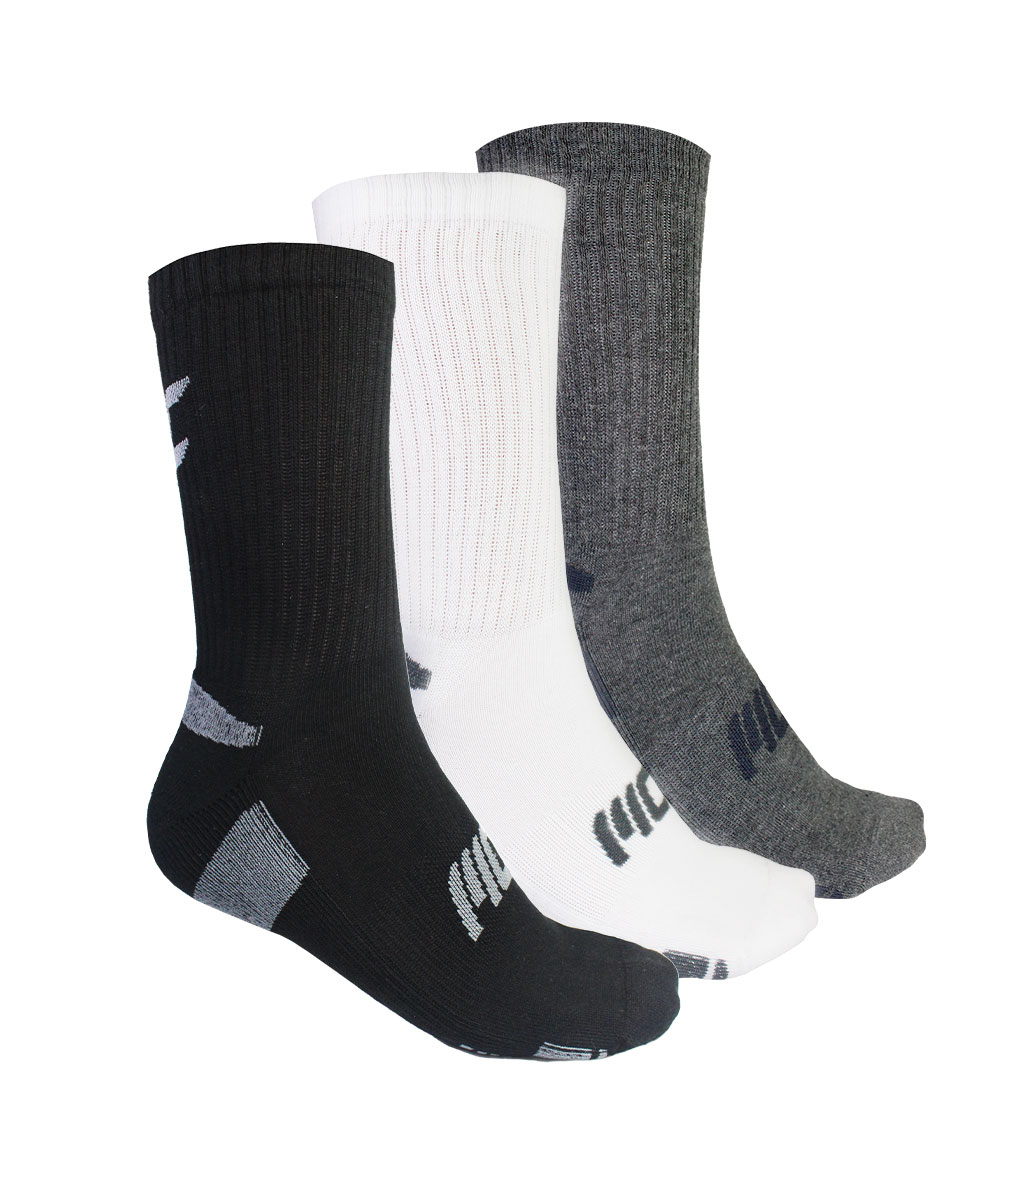 Musclecloth Stay Fresh Uzun Çorap 3'Lü Paket Gri Beyaz Siyah 